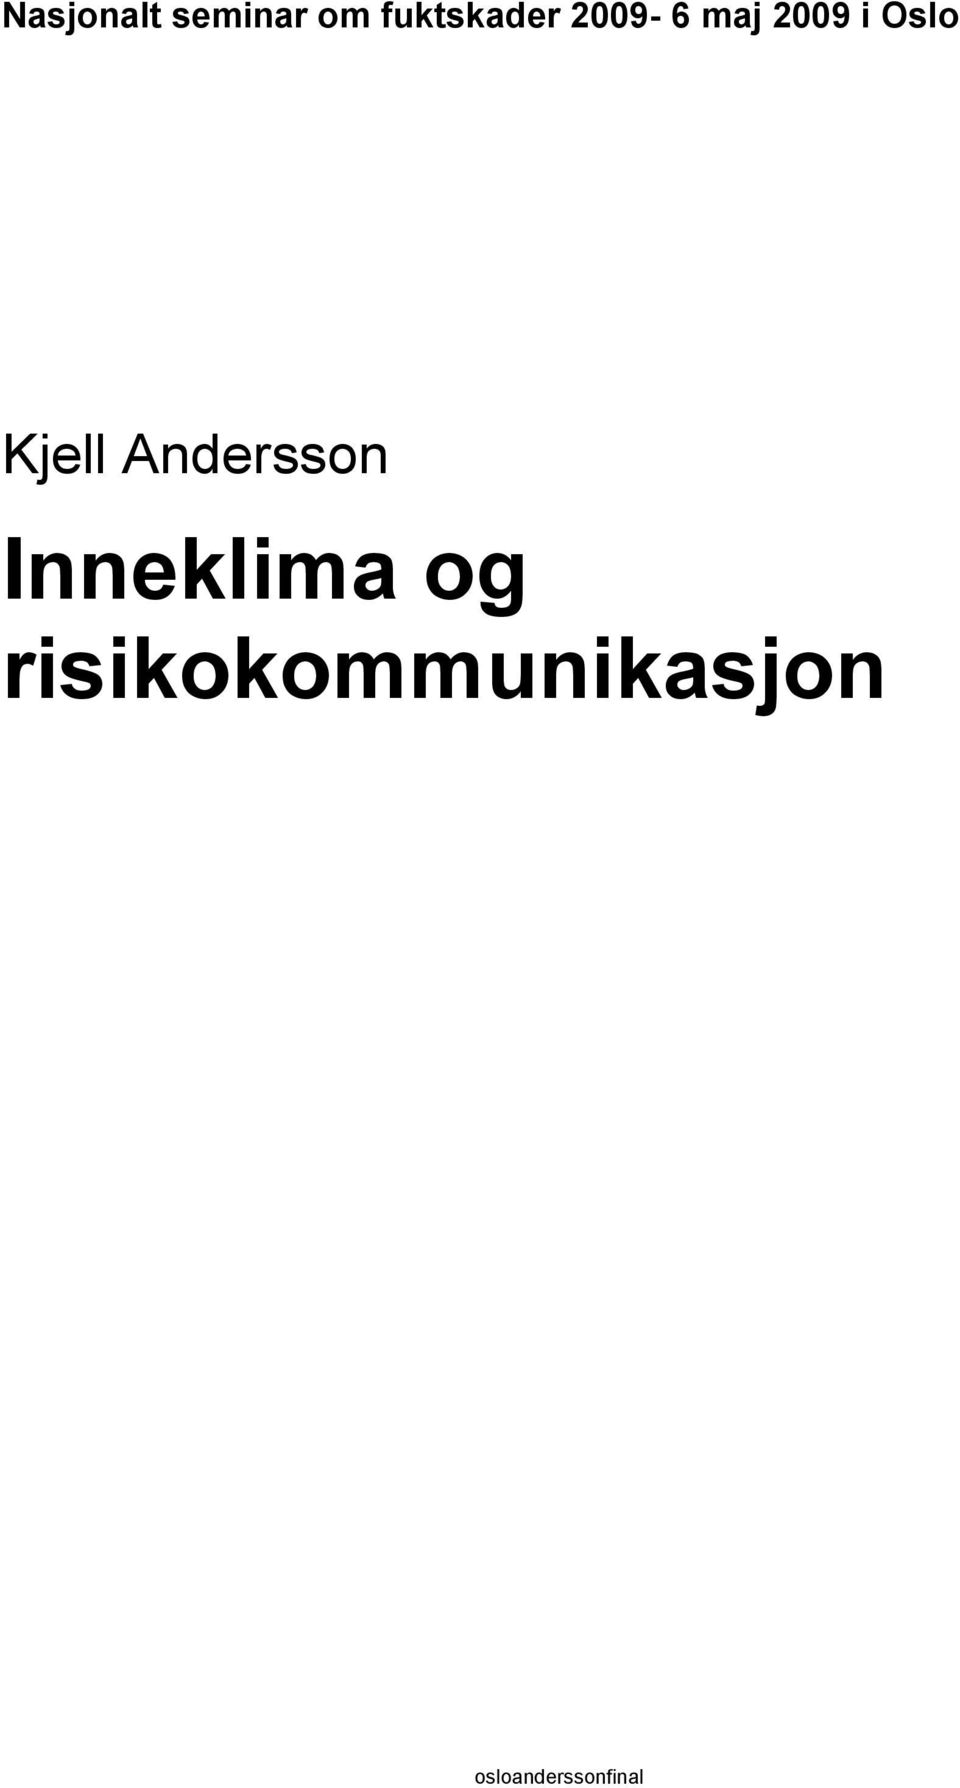 Oslo Kjell Andersson Inneklima